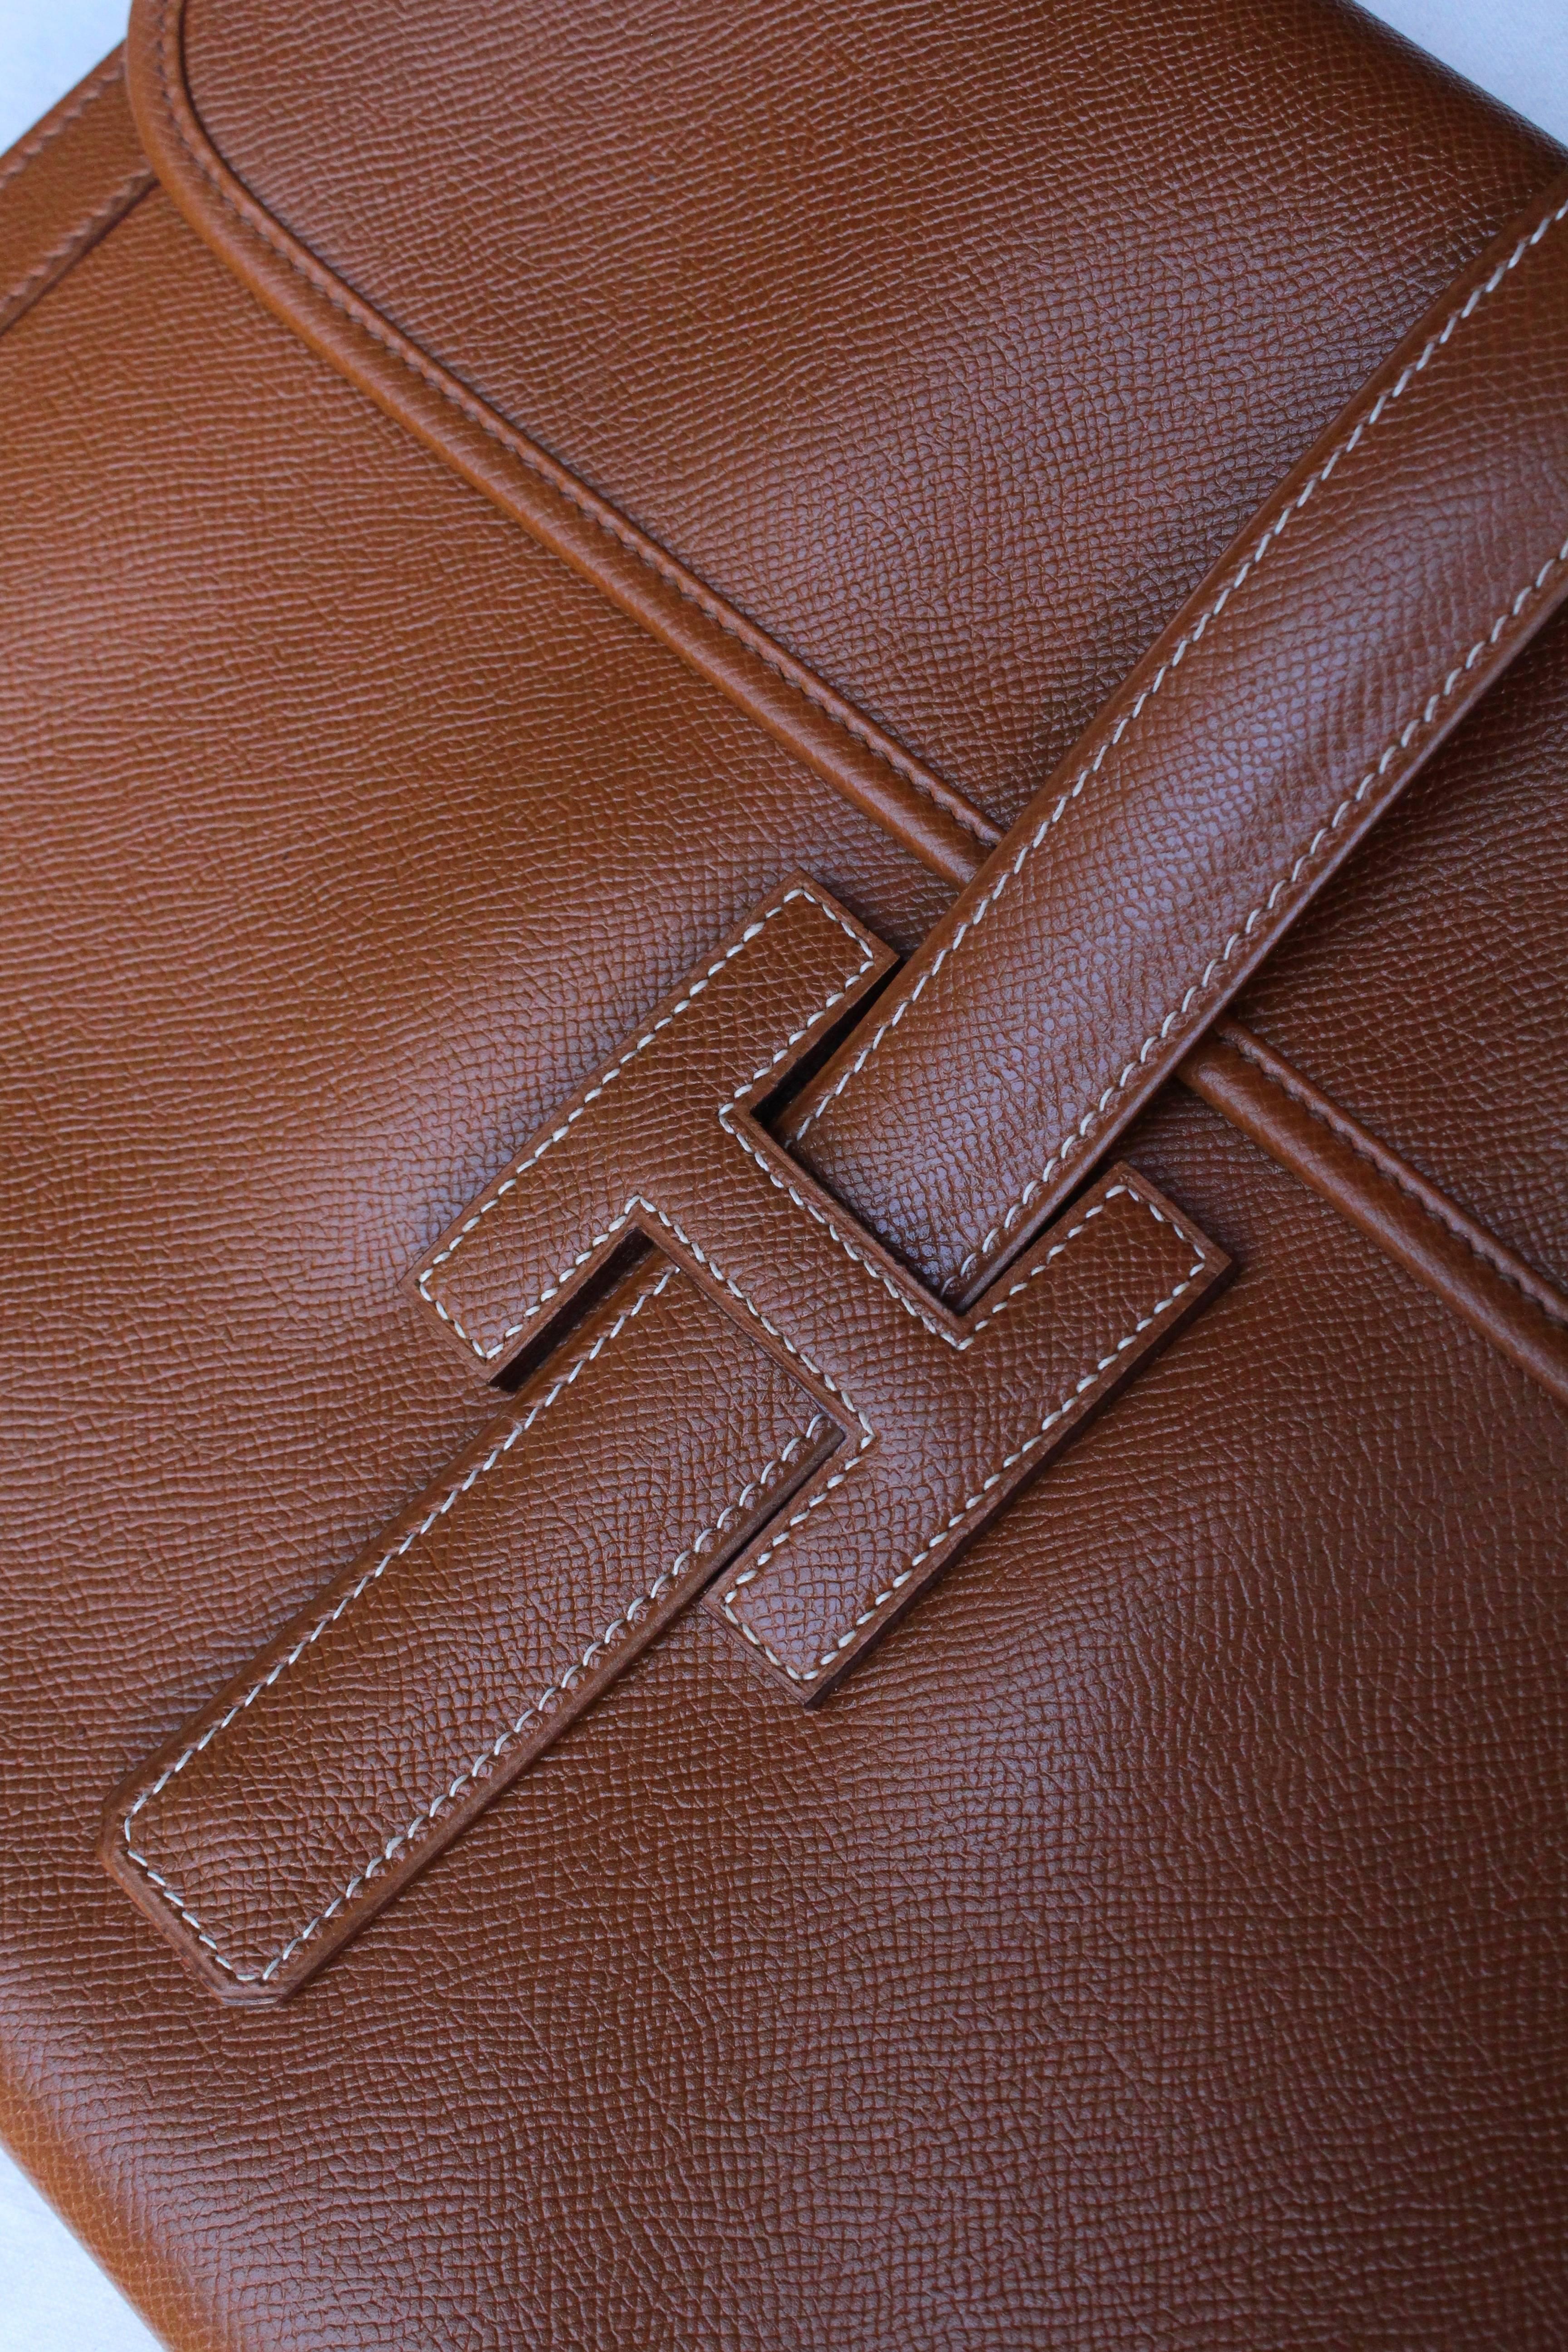 Hermès “Jige” model clutch in tan togo leather 1